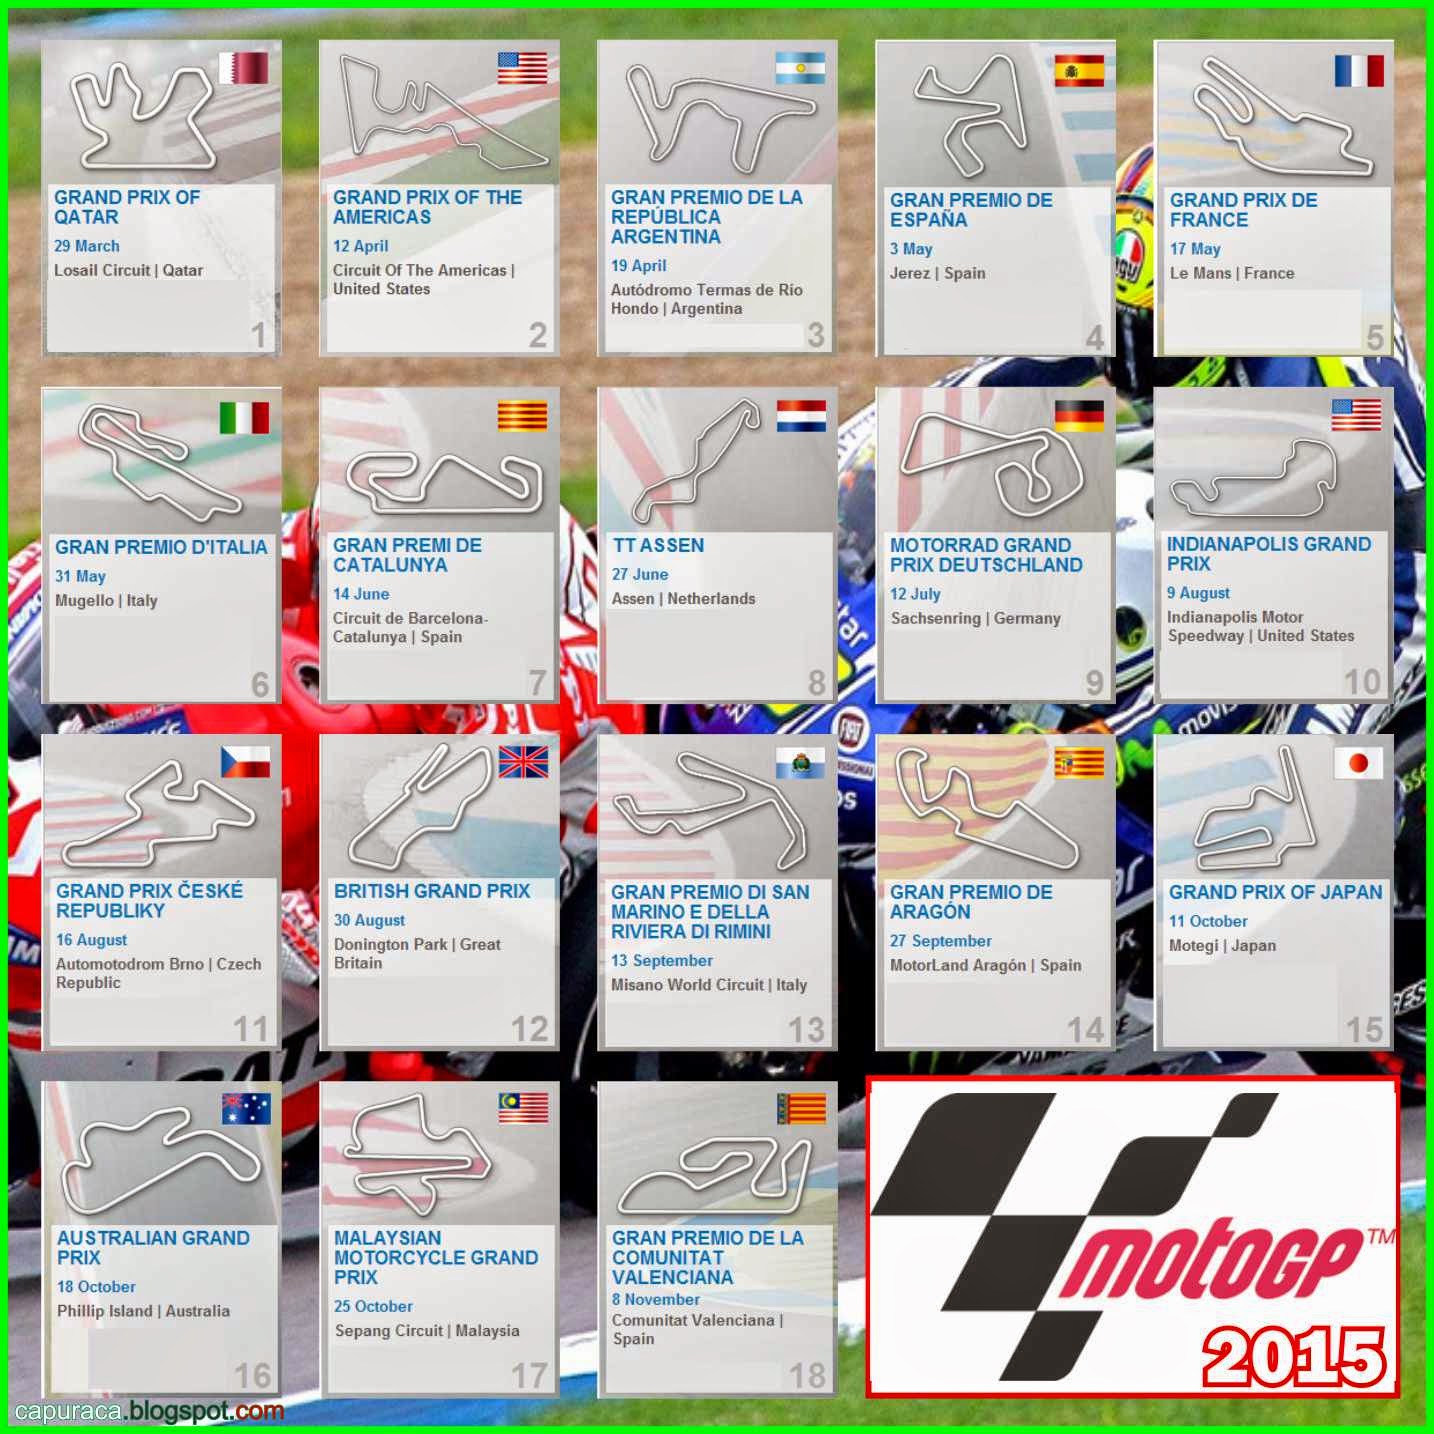 Informasi lengkap jadwal race motogp 2015 Trans7,jadwal balap motogp trans7